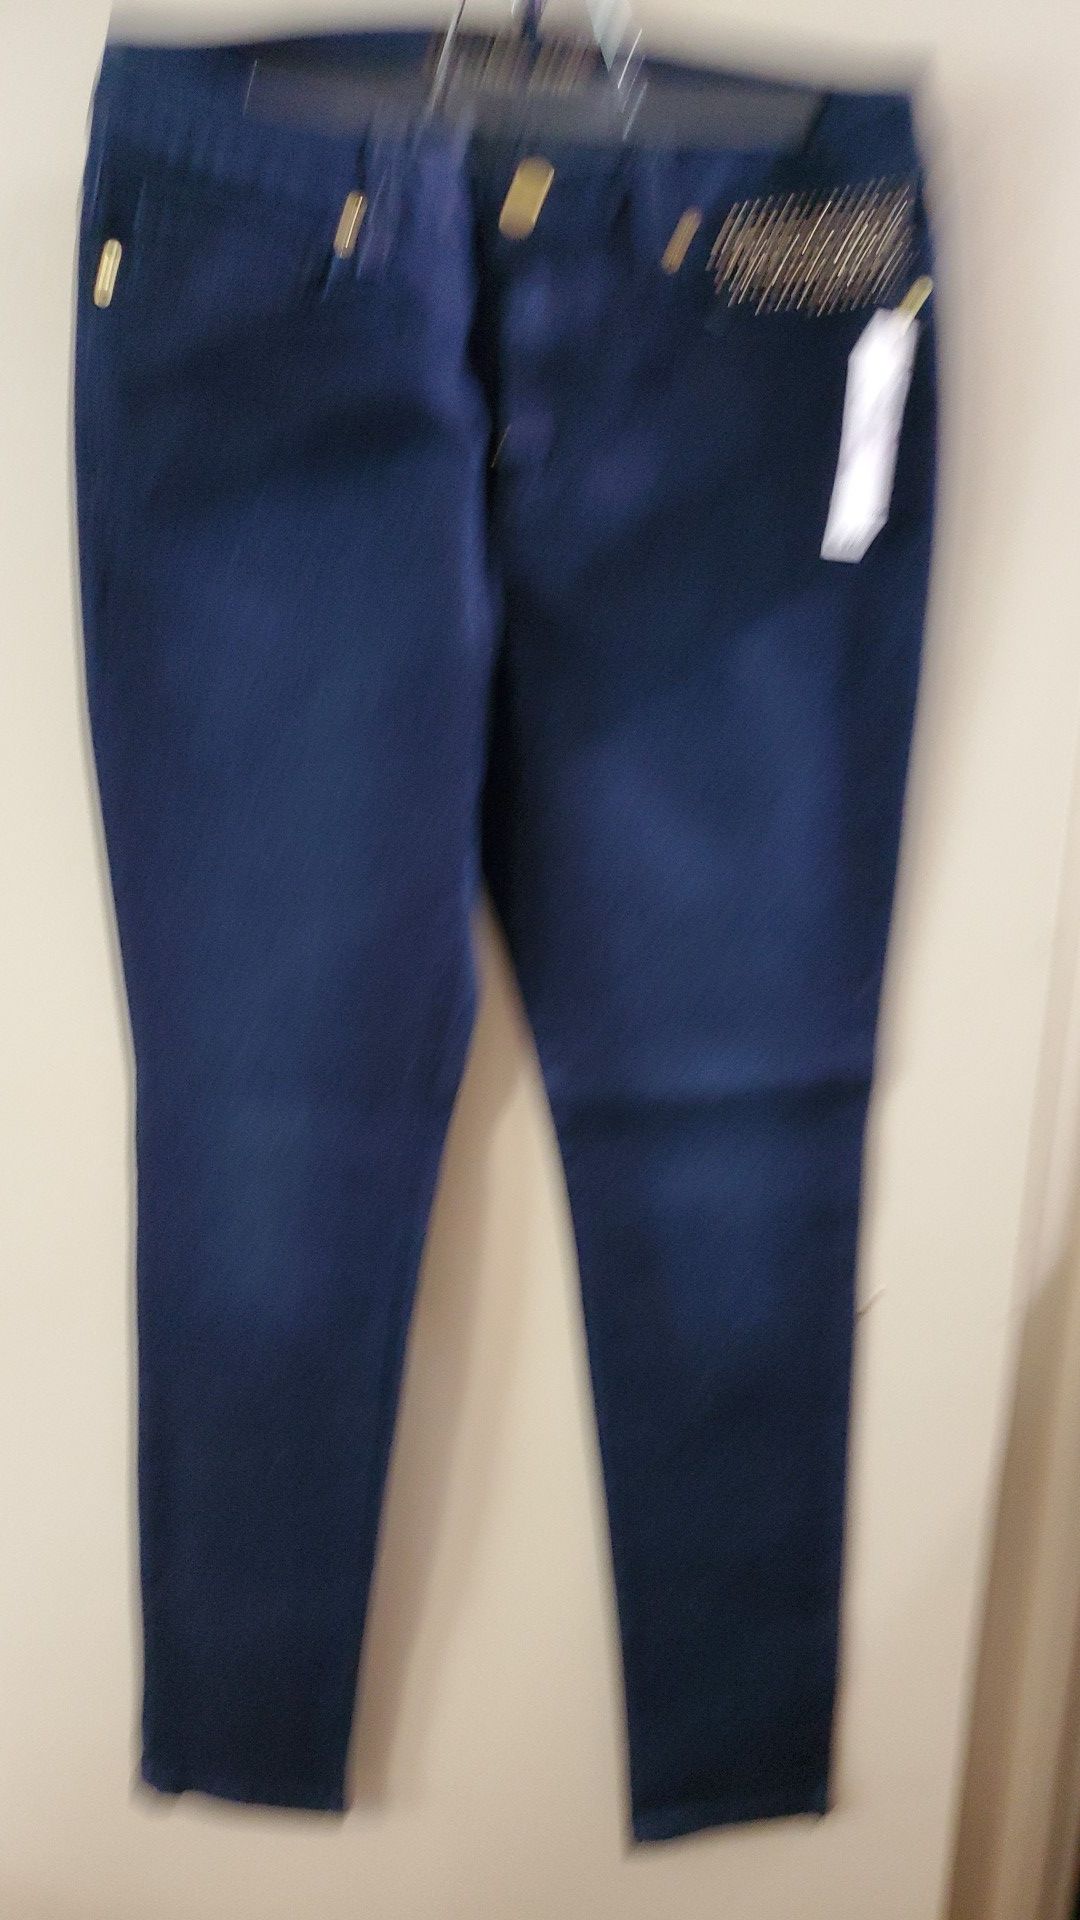 Michael Kors jeans